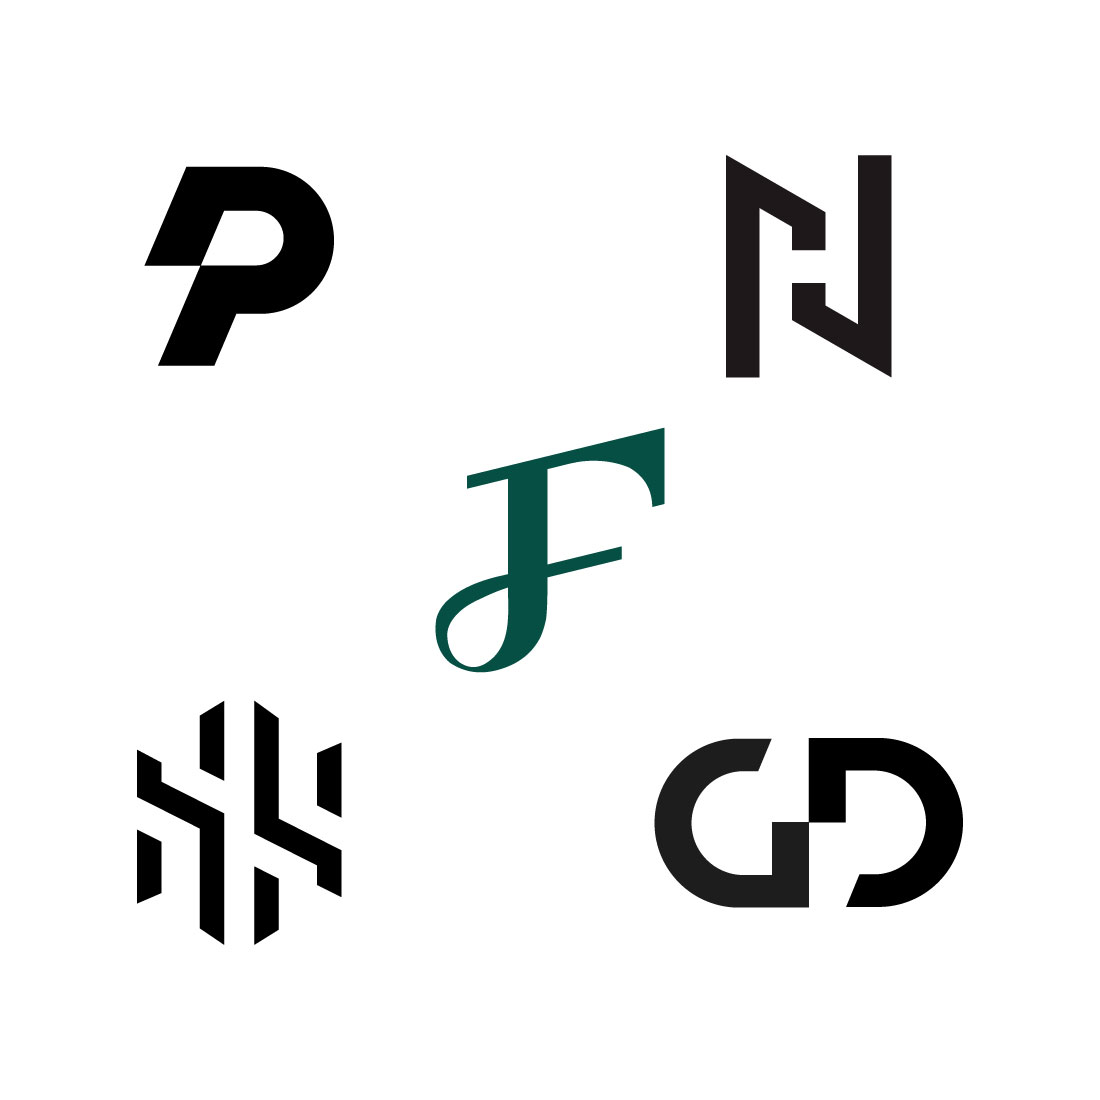 5 Word Mark Design Logos cover image.